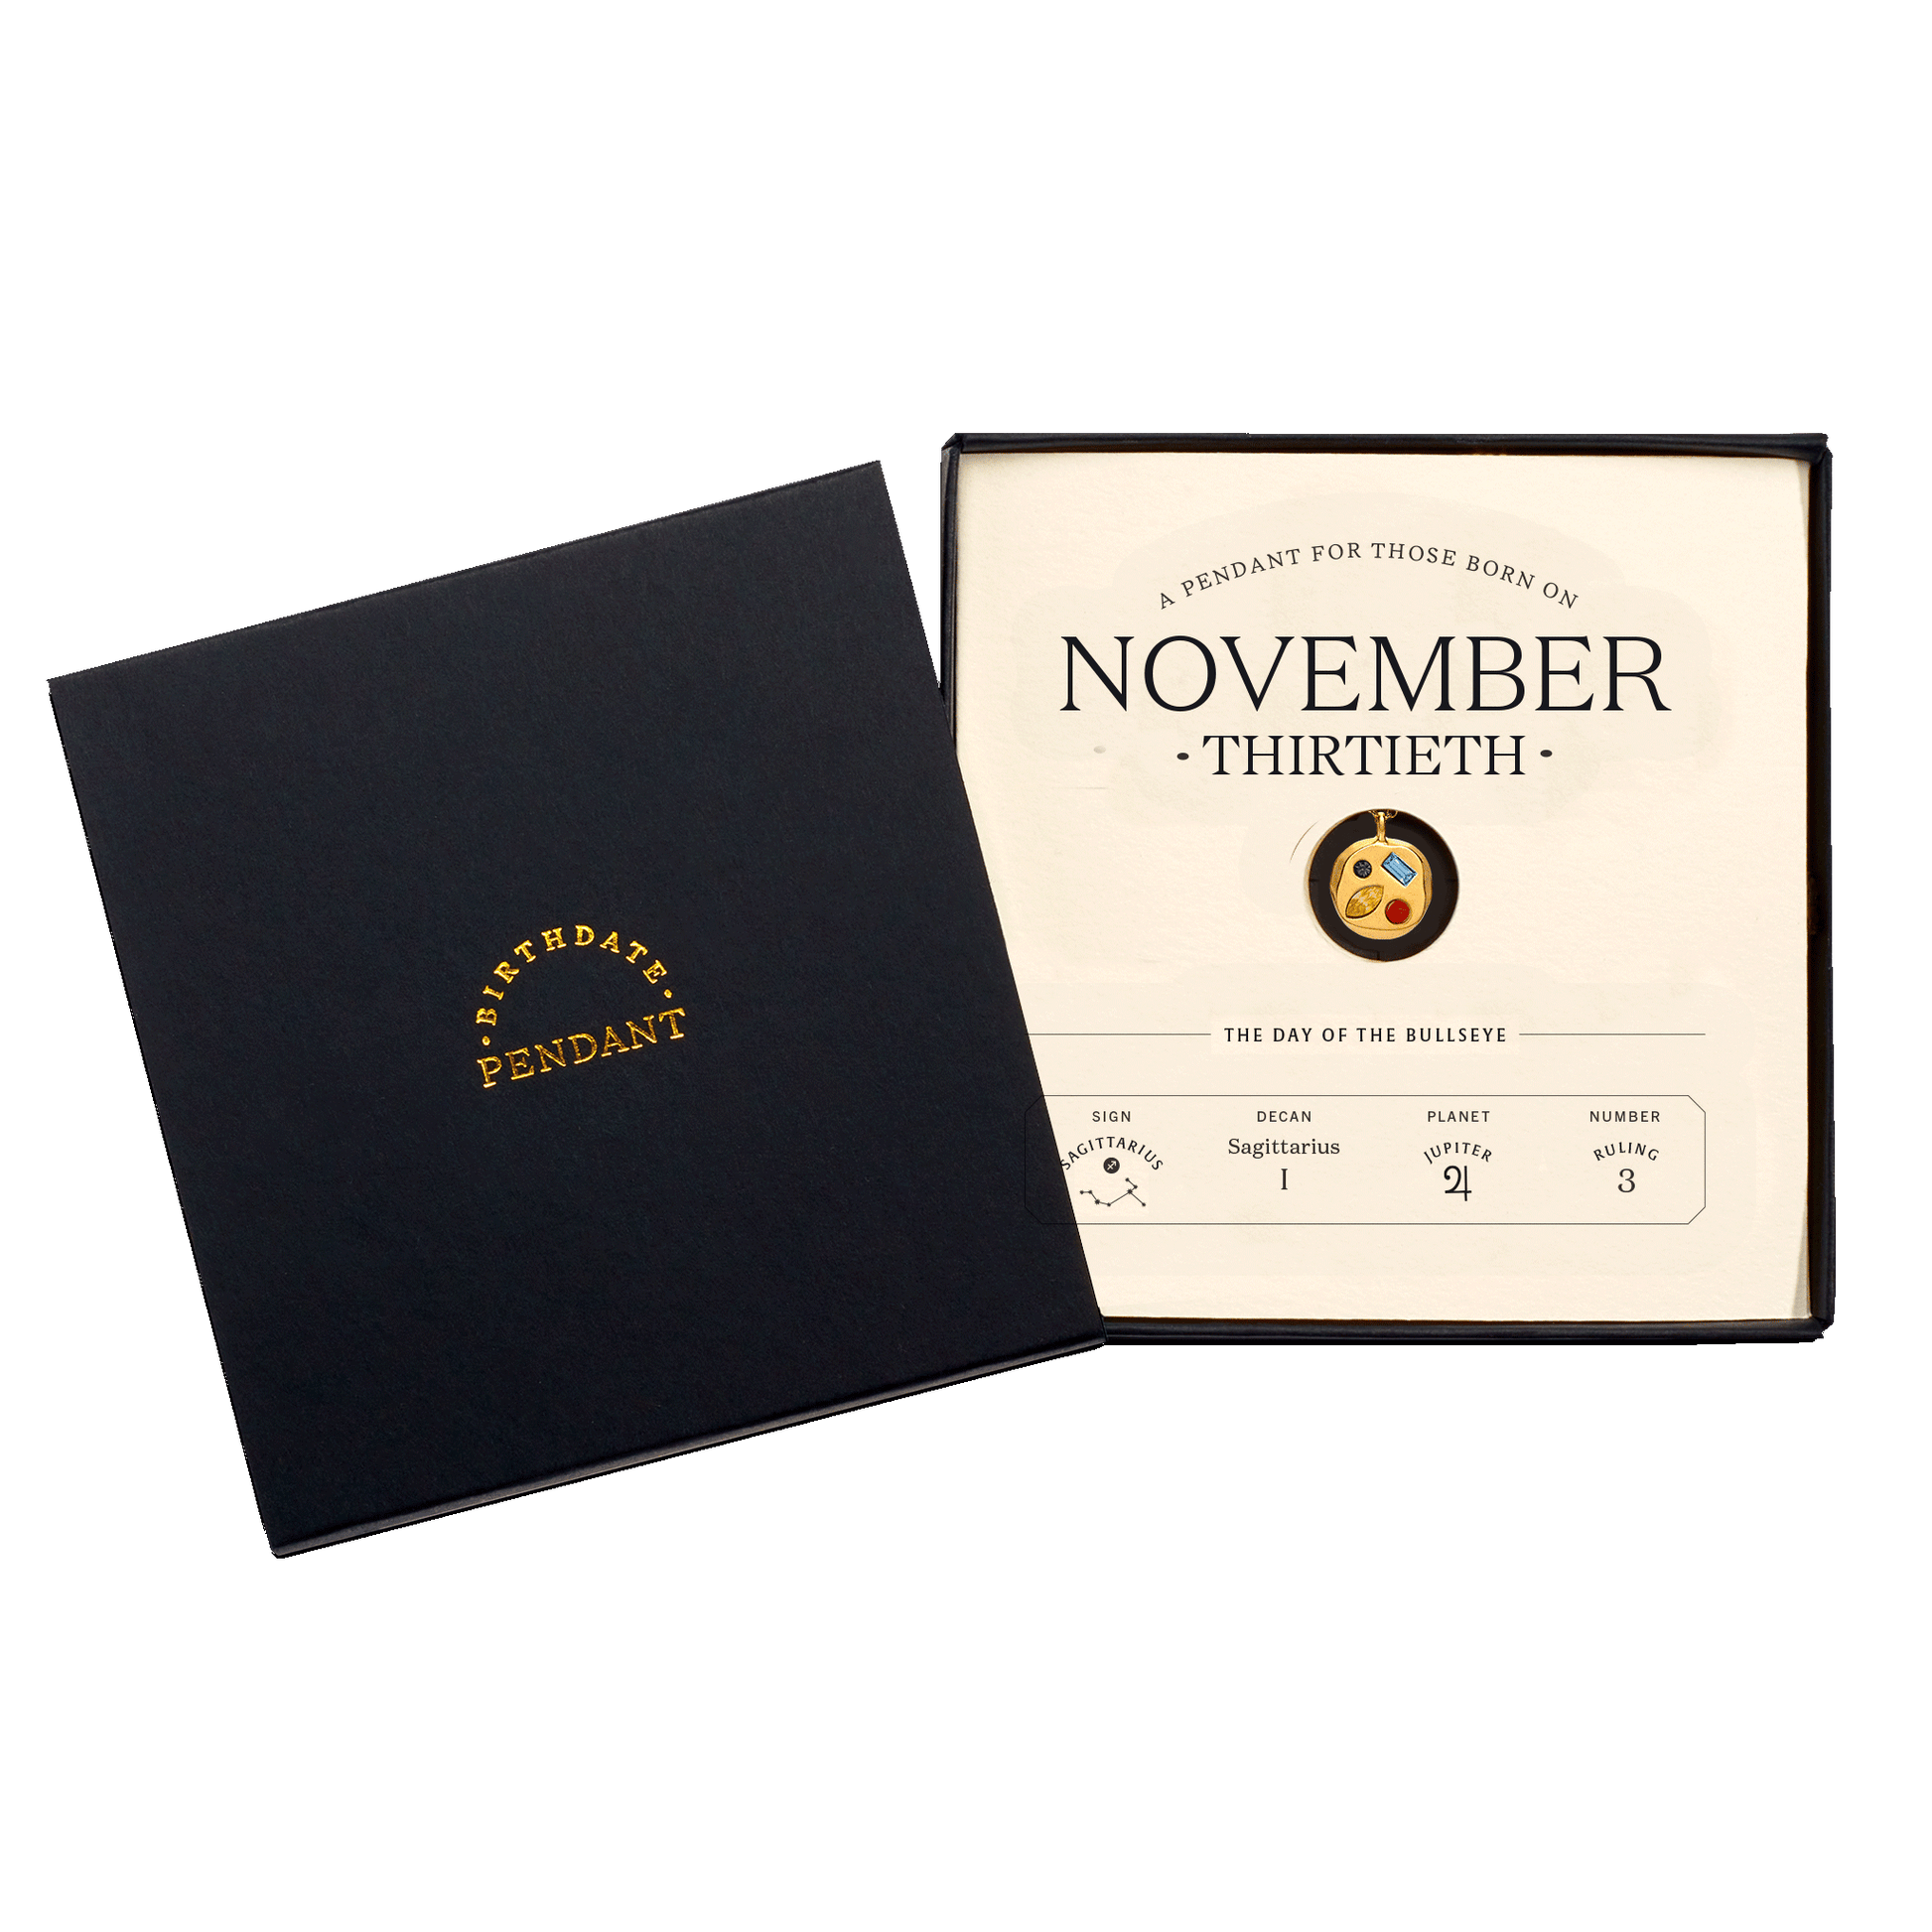 The November Thirtieth Pendant inside its box